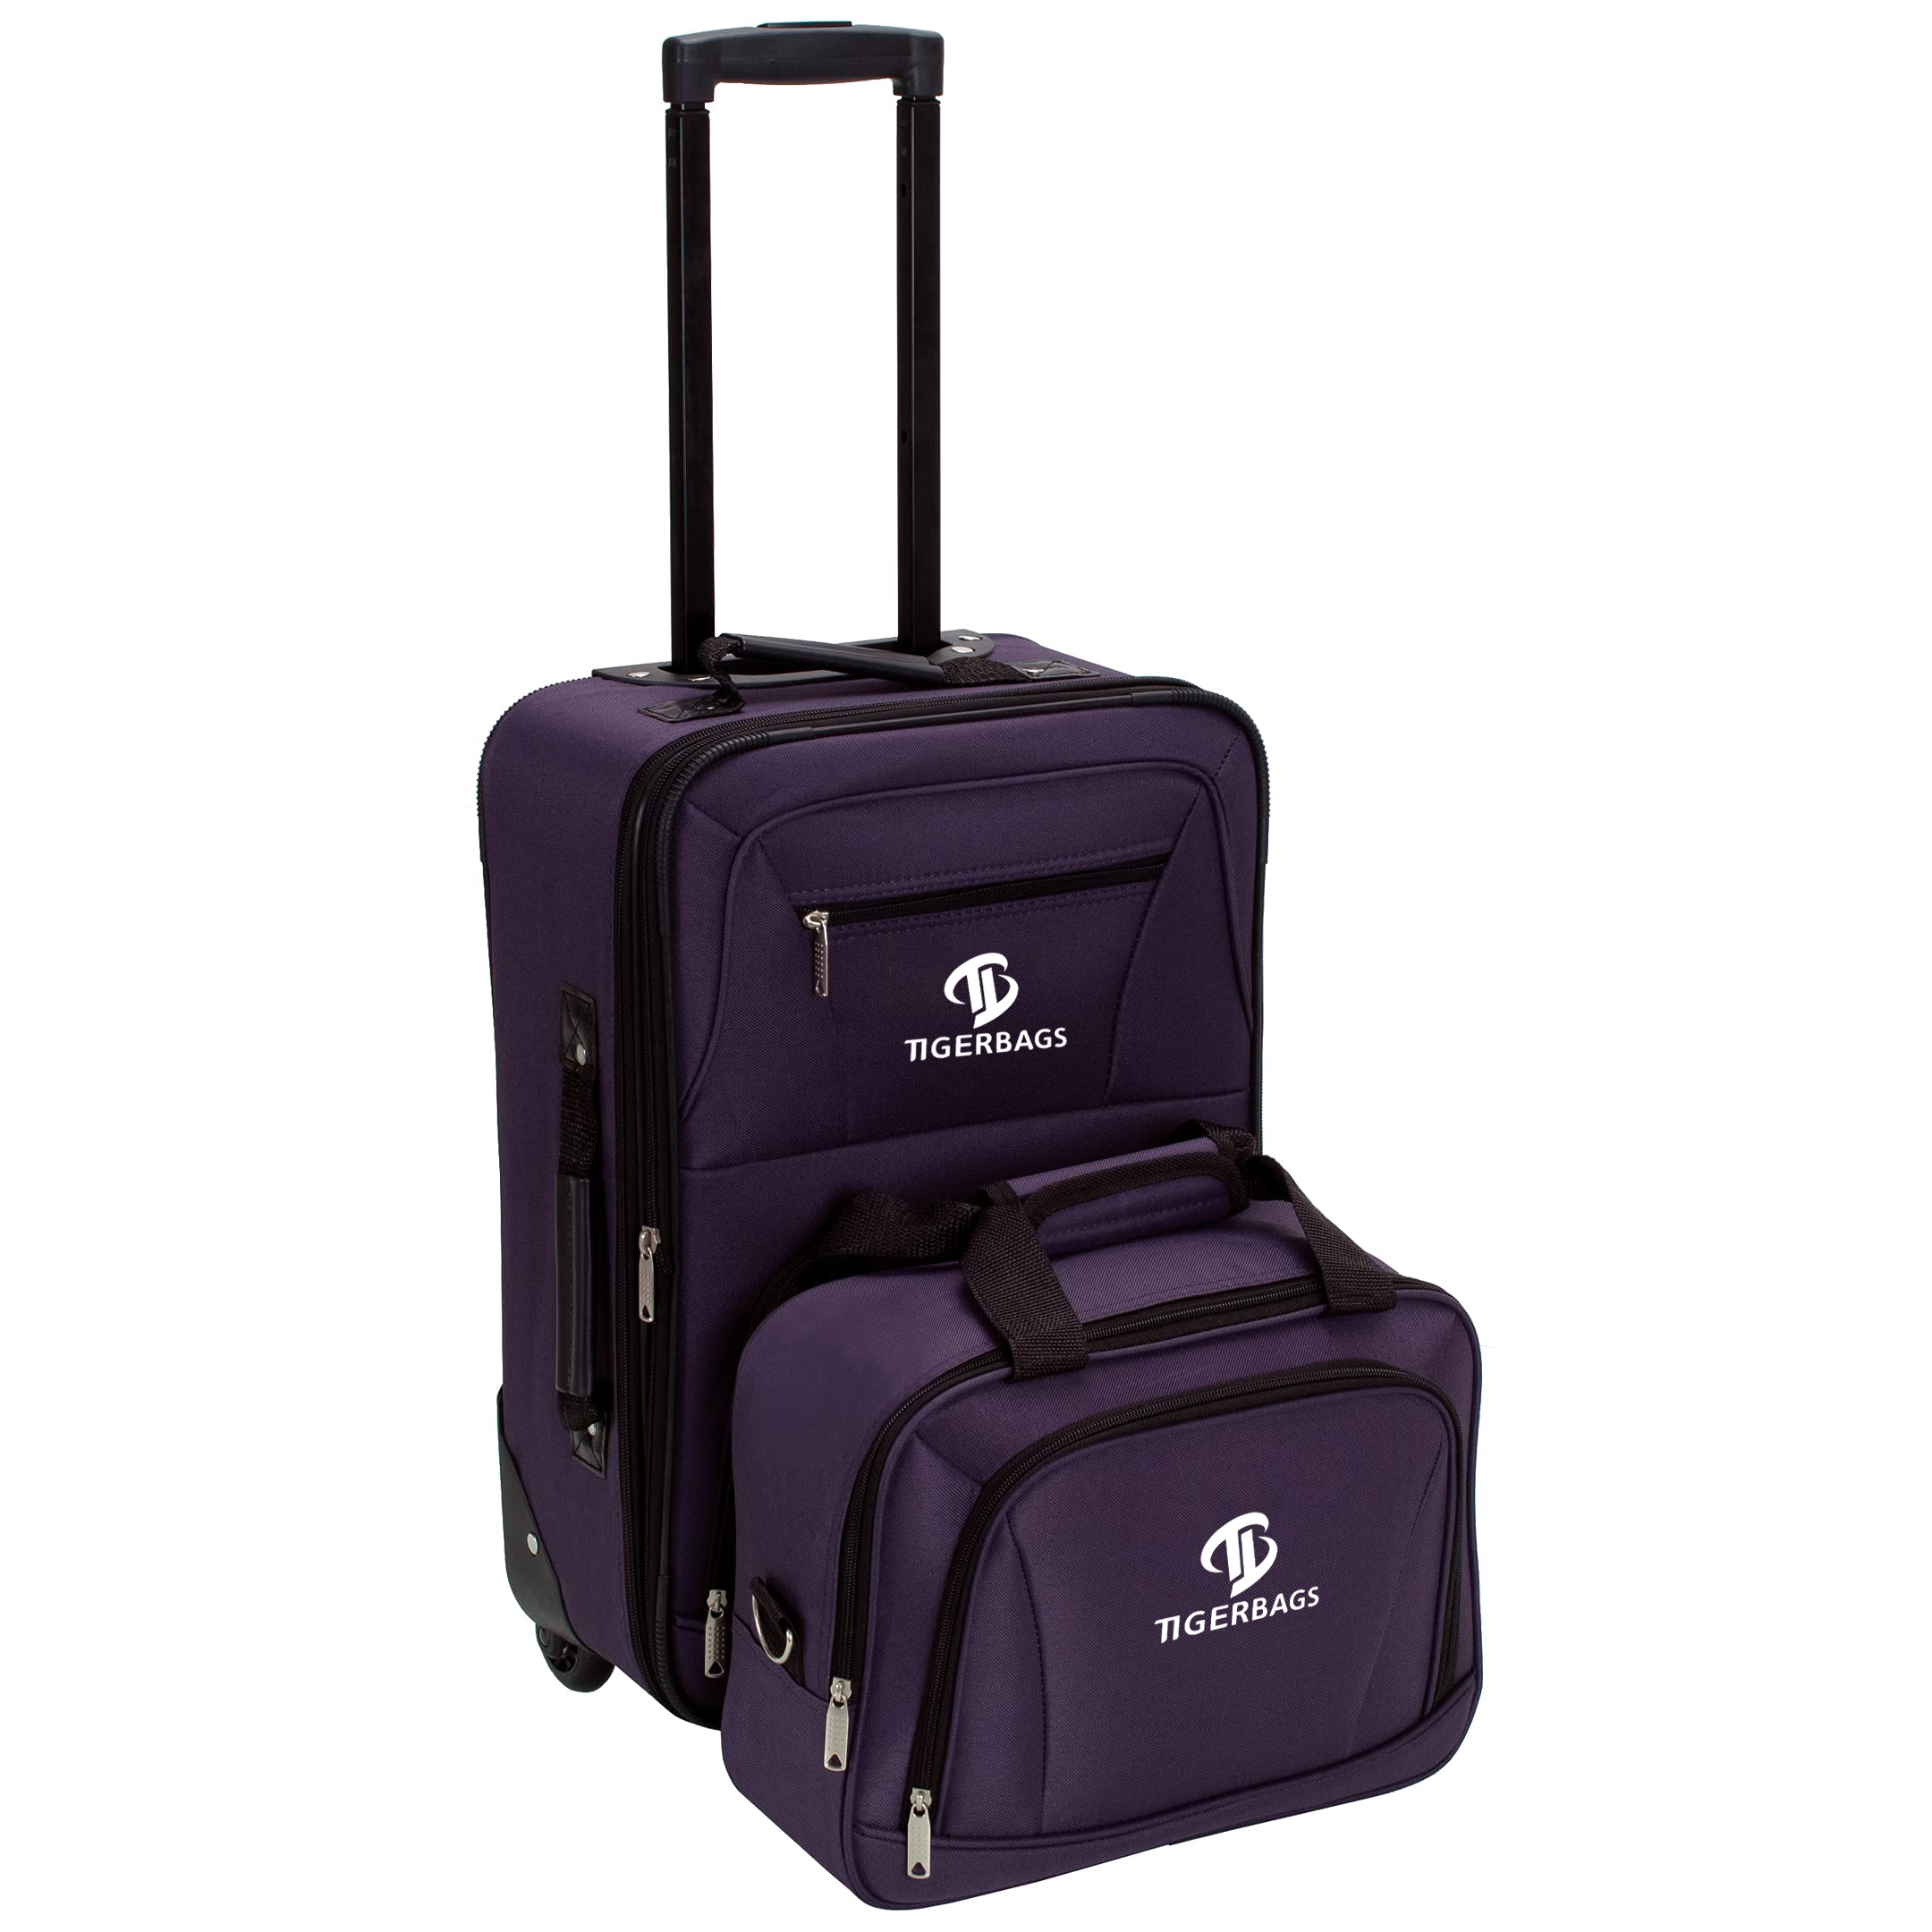 Set Bagasi Tegak Fesyen Softside Ungu.Set bagasi tegak sisi lembut fesyen berwarna ungu